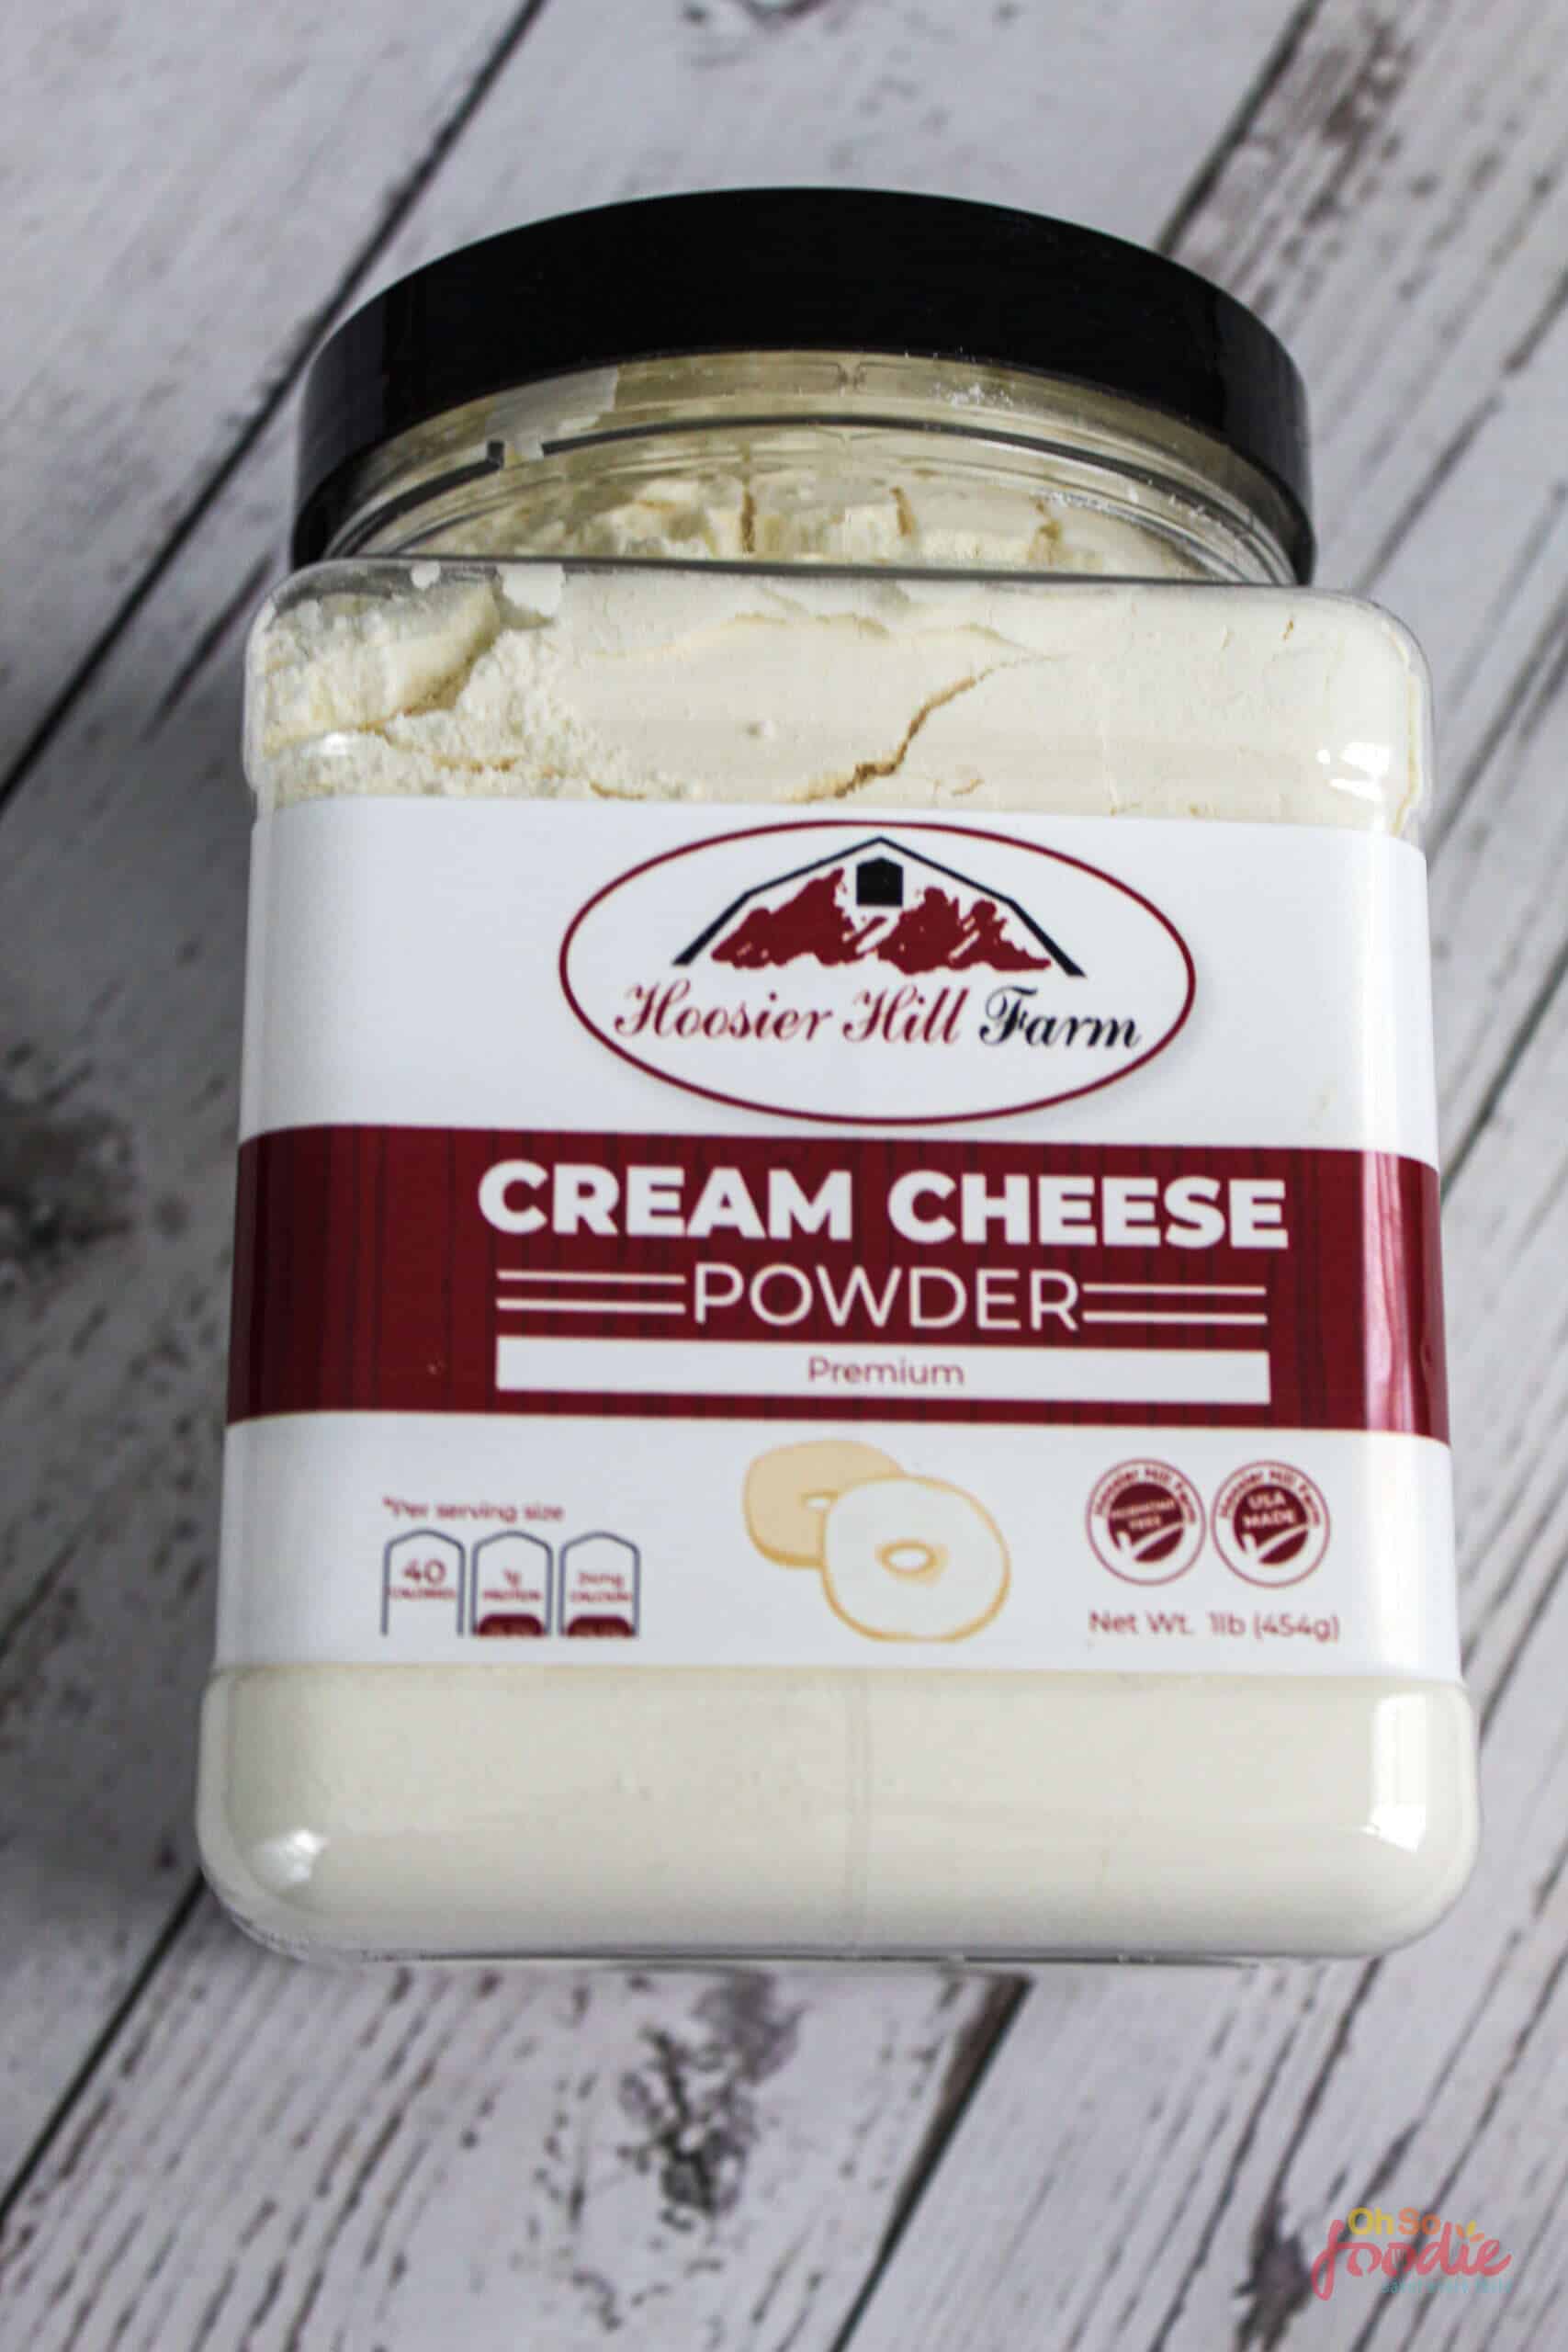 Cream cheese powder